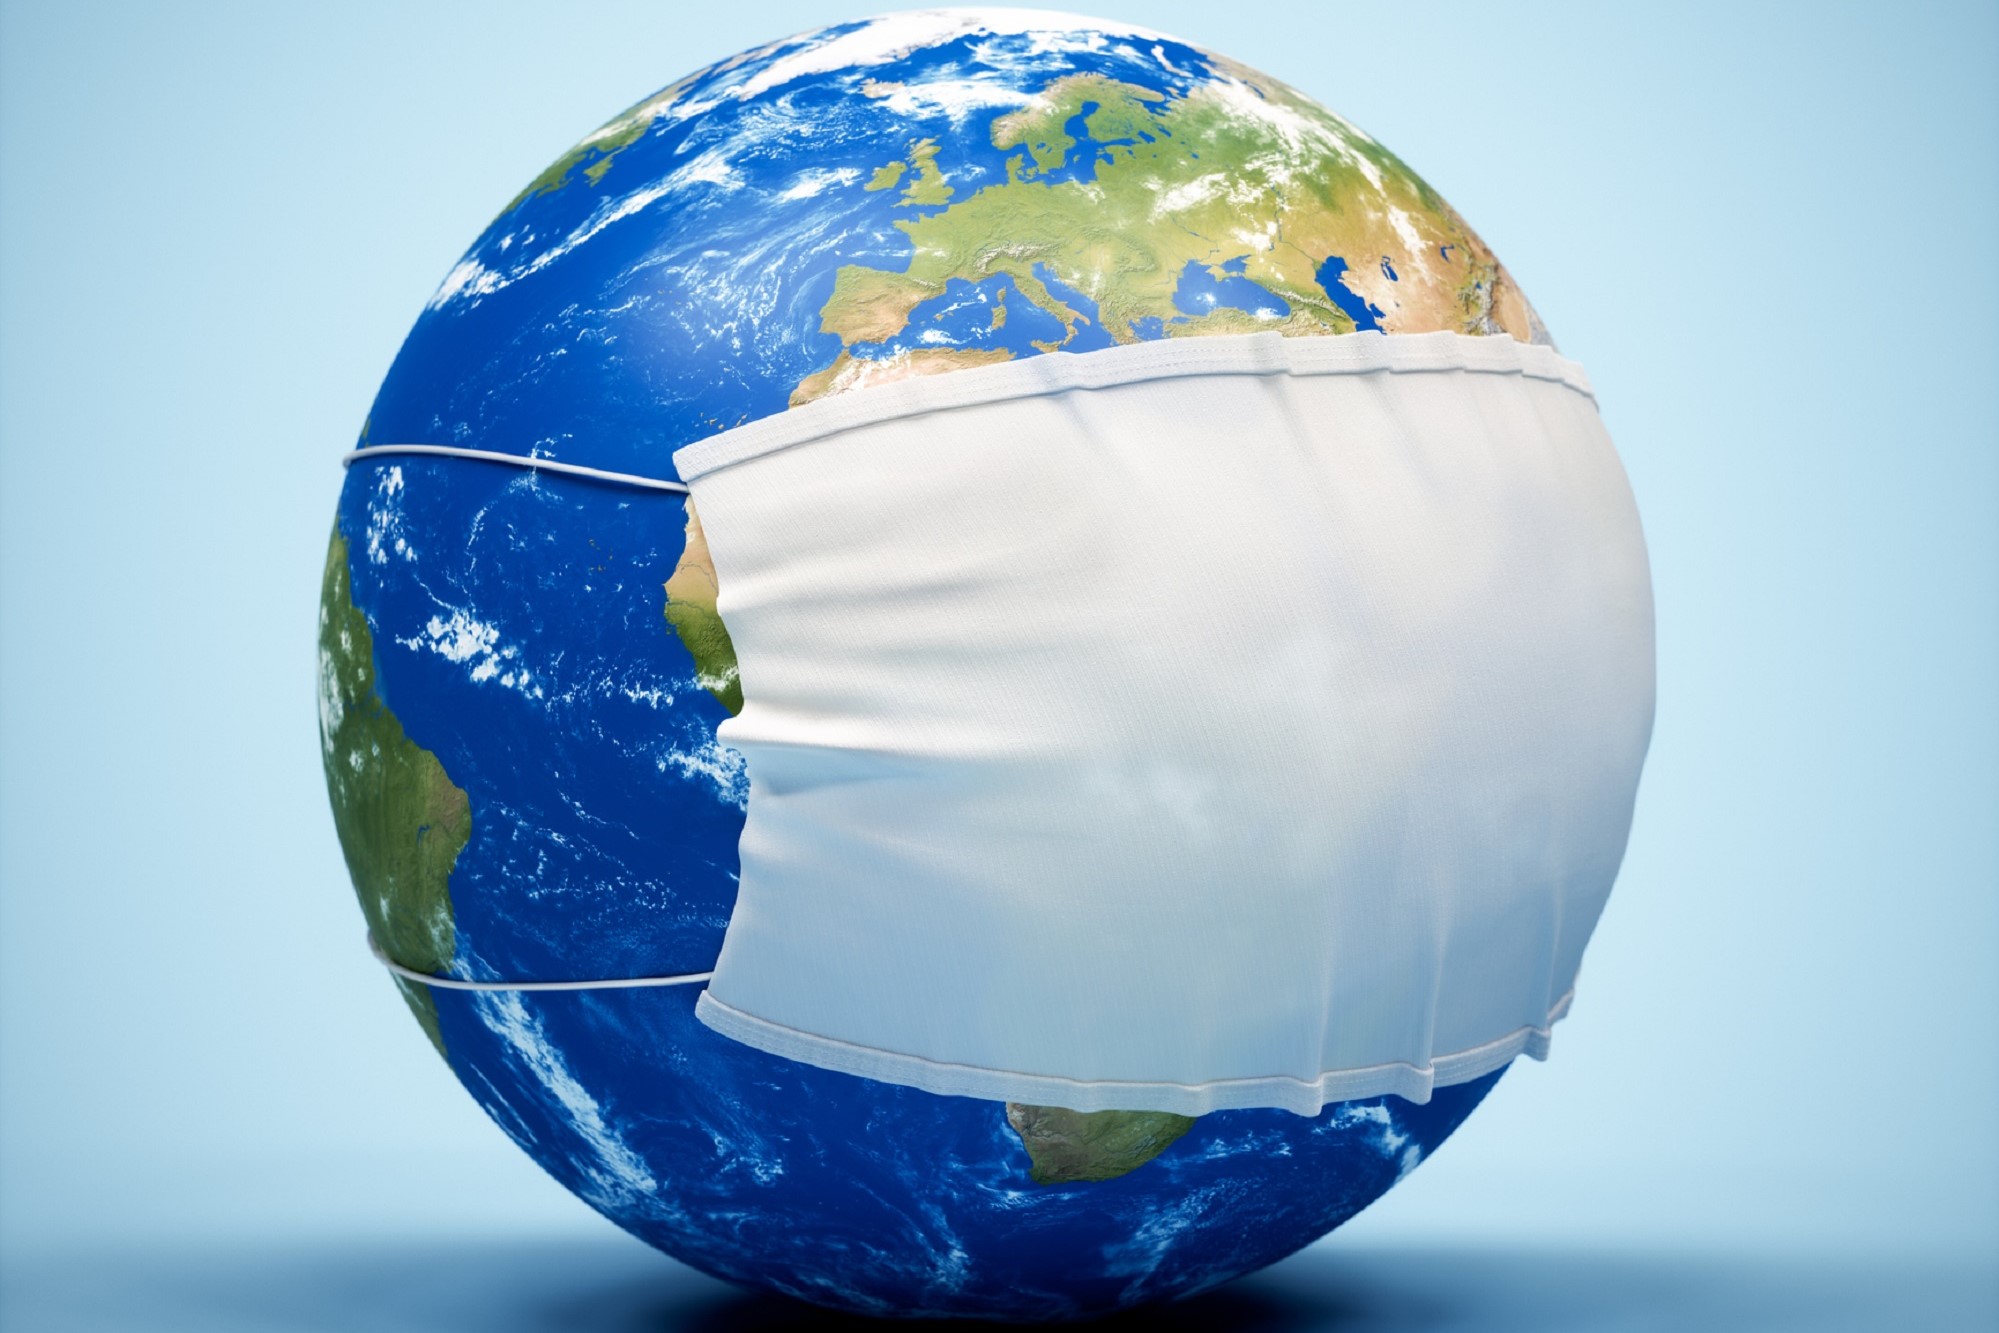 A world globe wearing a medical mask